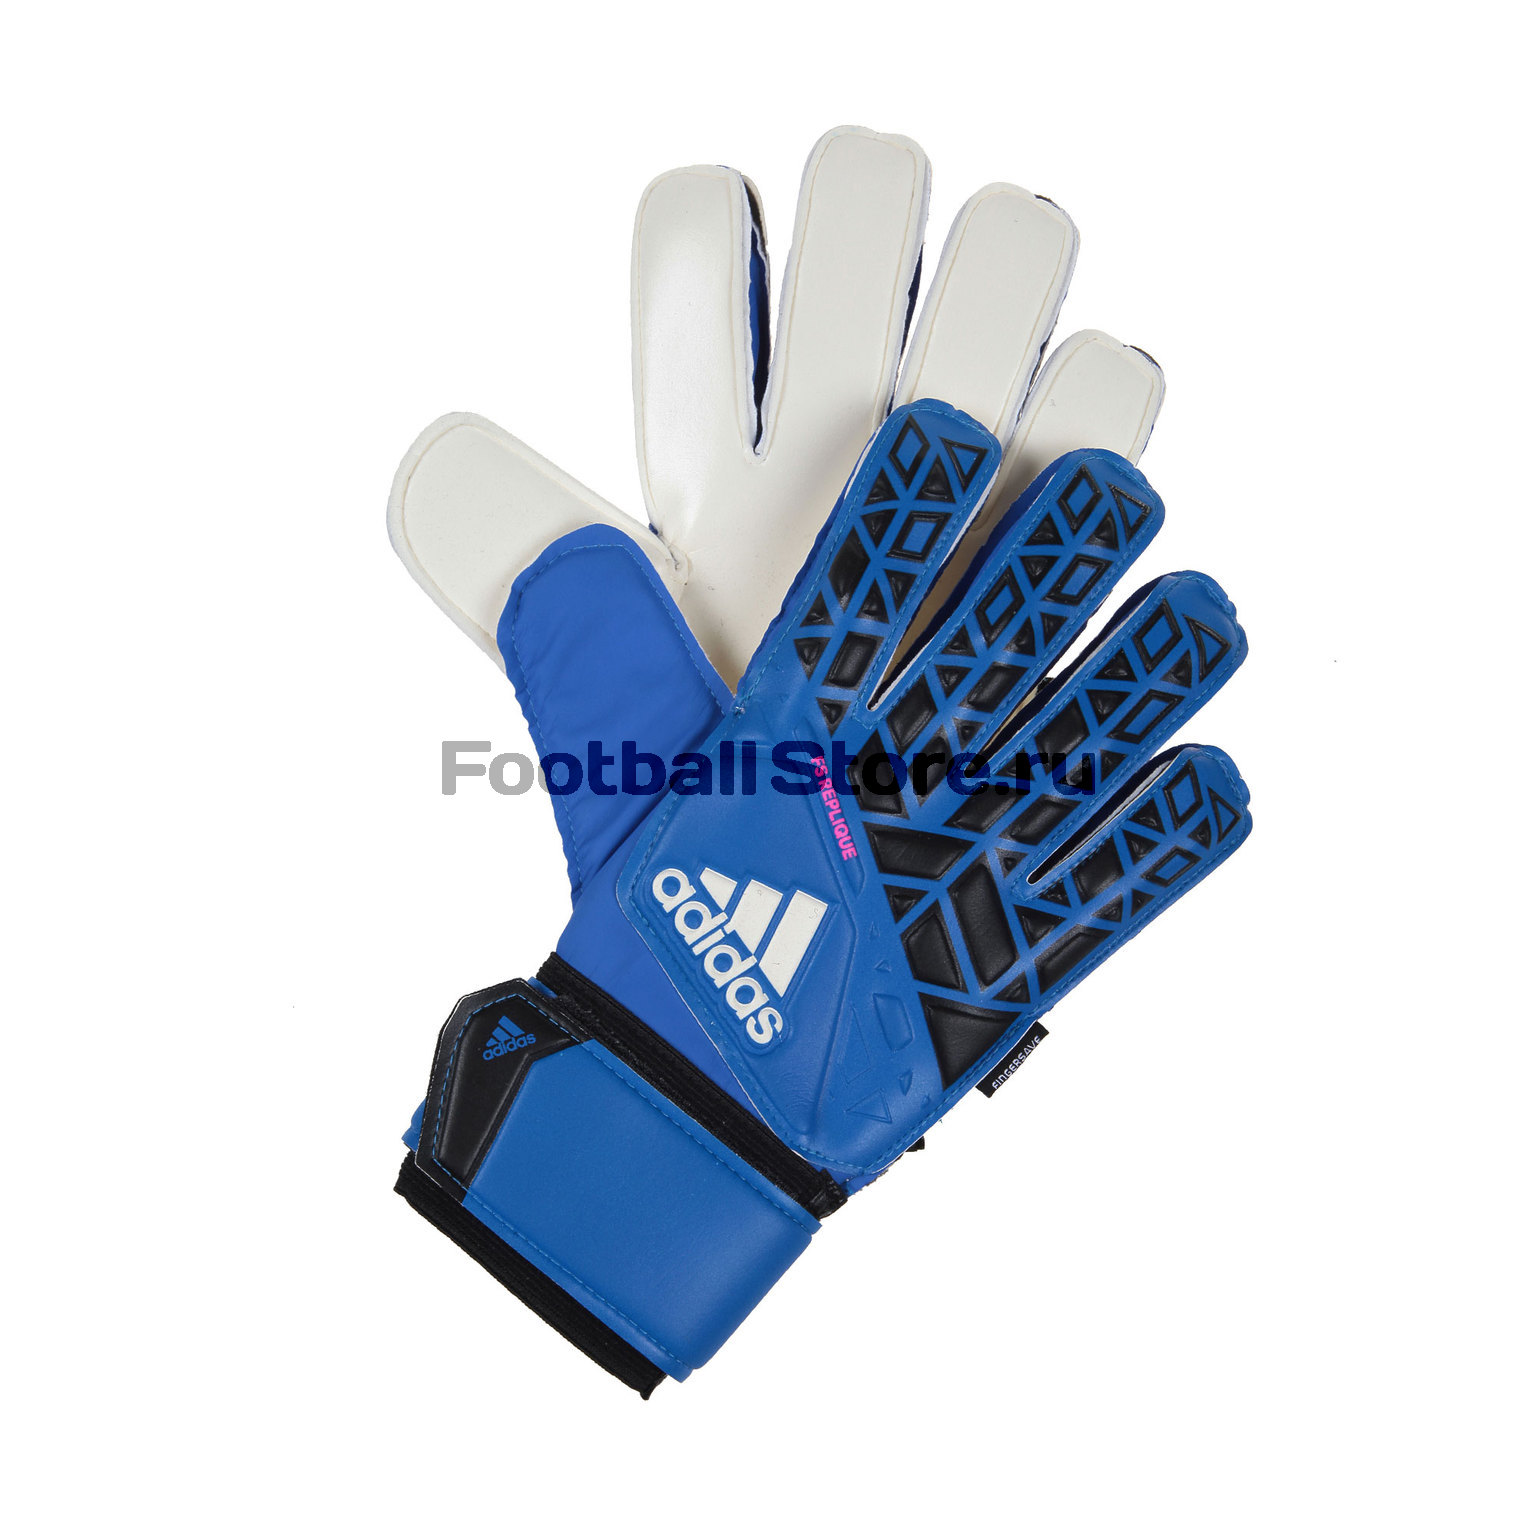 Перчатки вратарские Adidas Ace FS Replique AZ3685